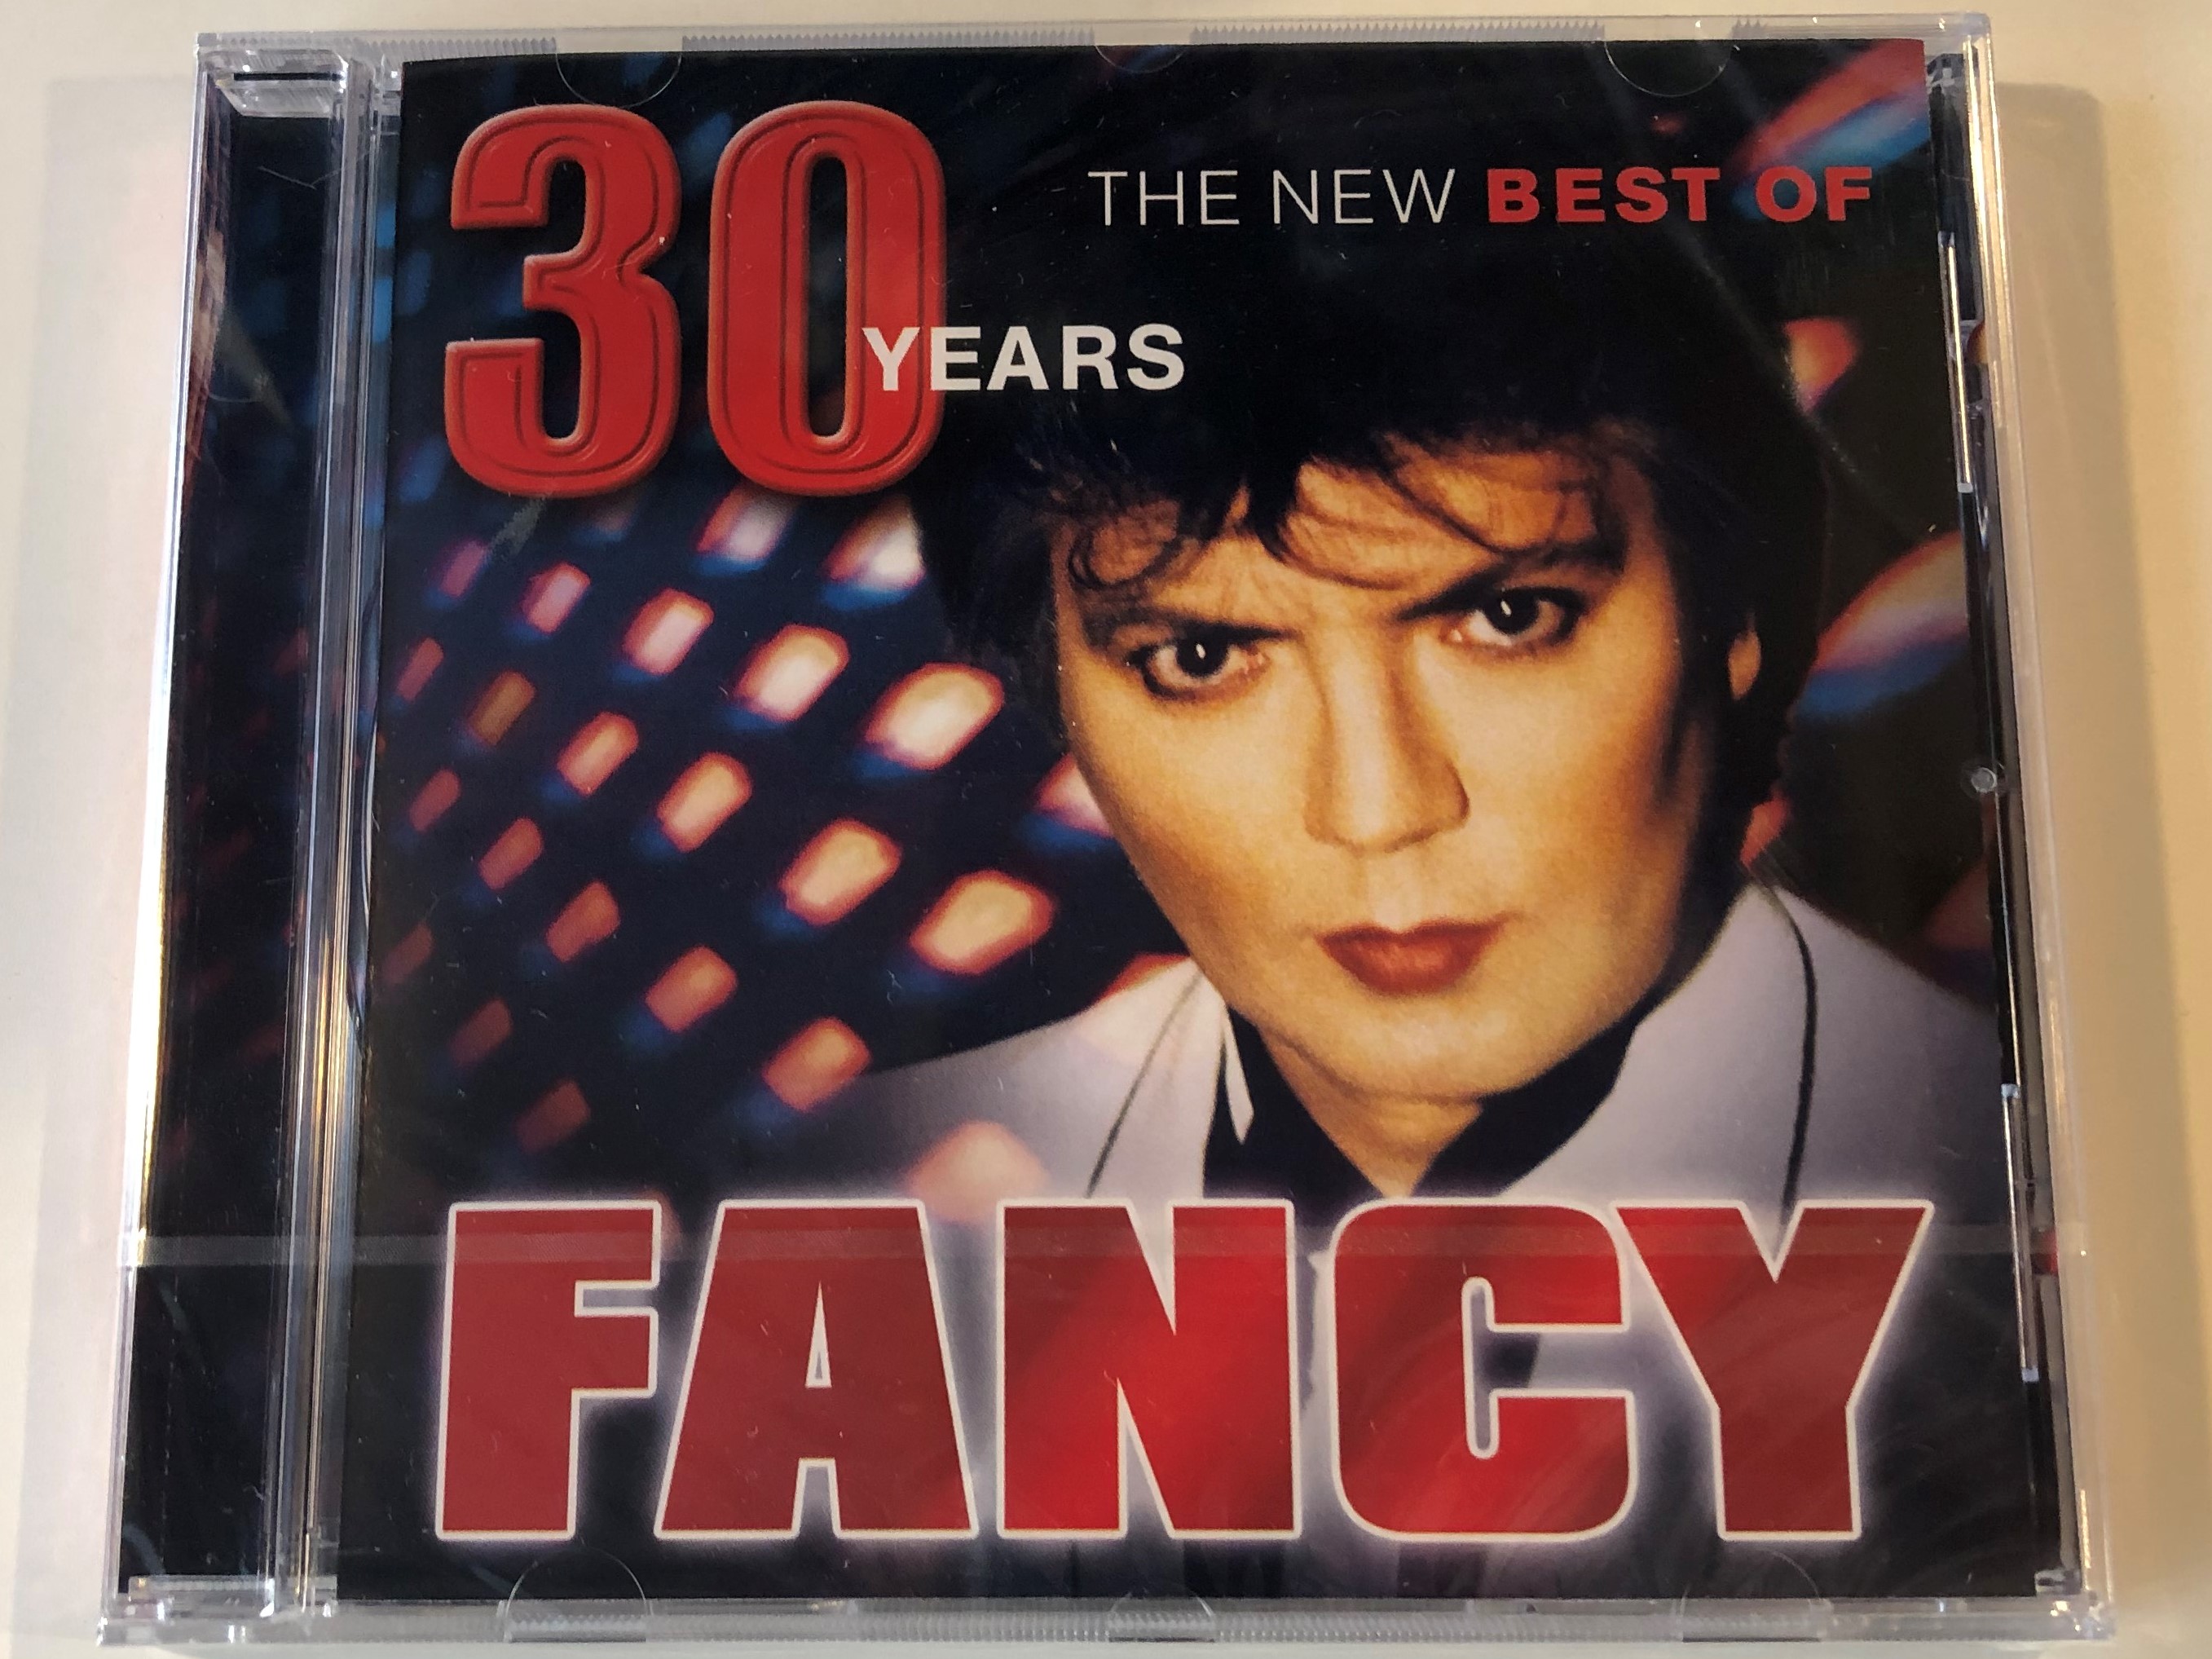 30-years-the-new-best-of-fancy-sony-music-audio-cd-2018-19075819432-1-.jpg